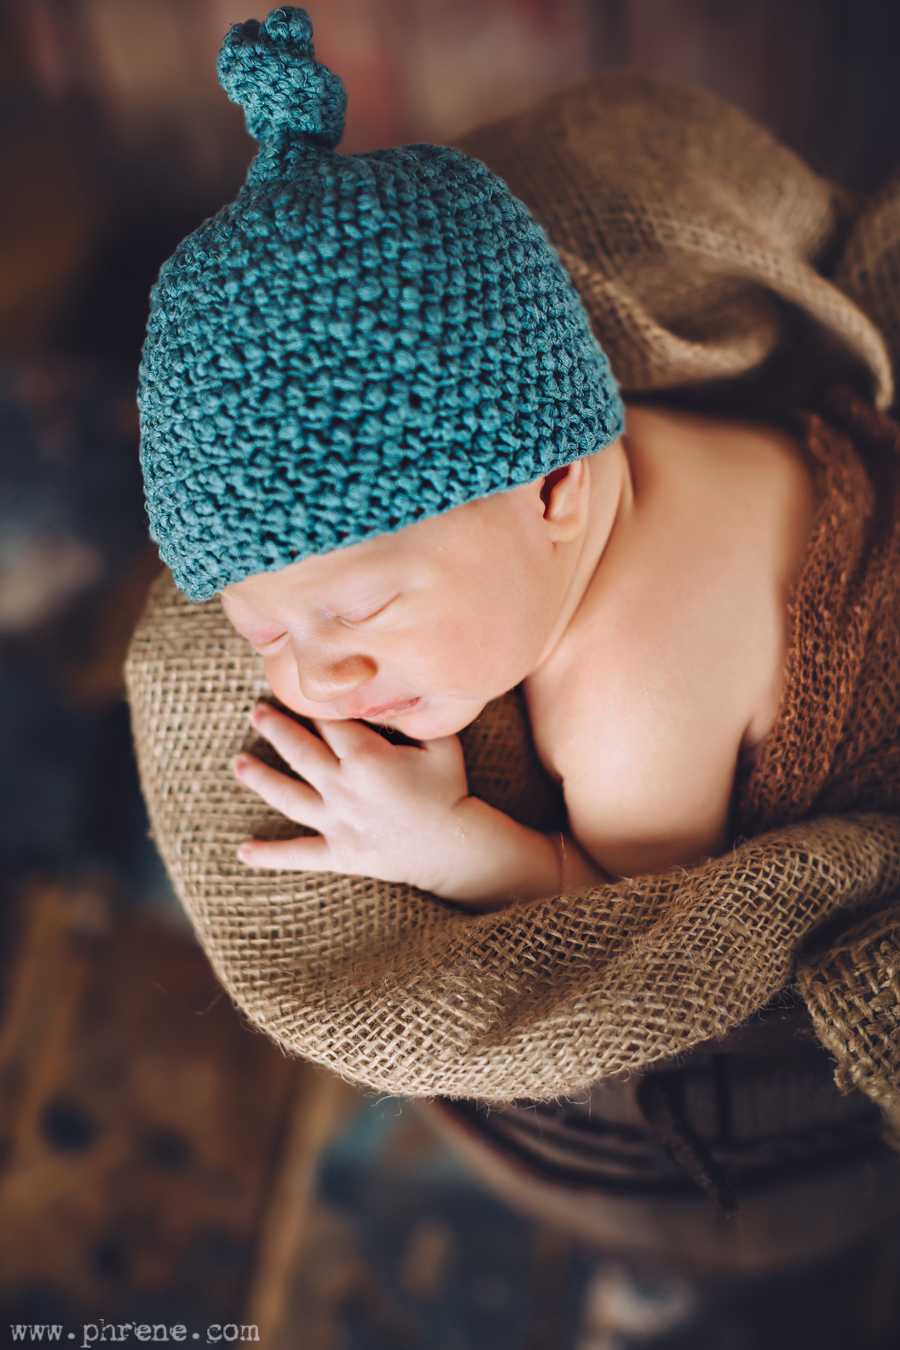 michigan-rustic-newborn-photography04